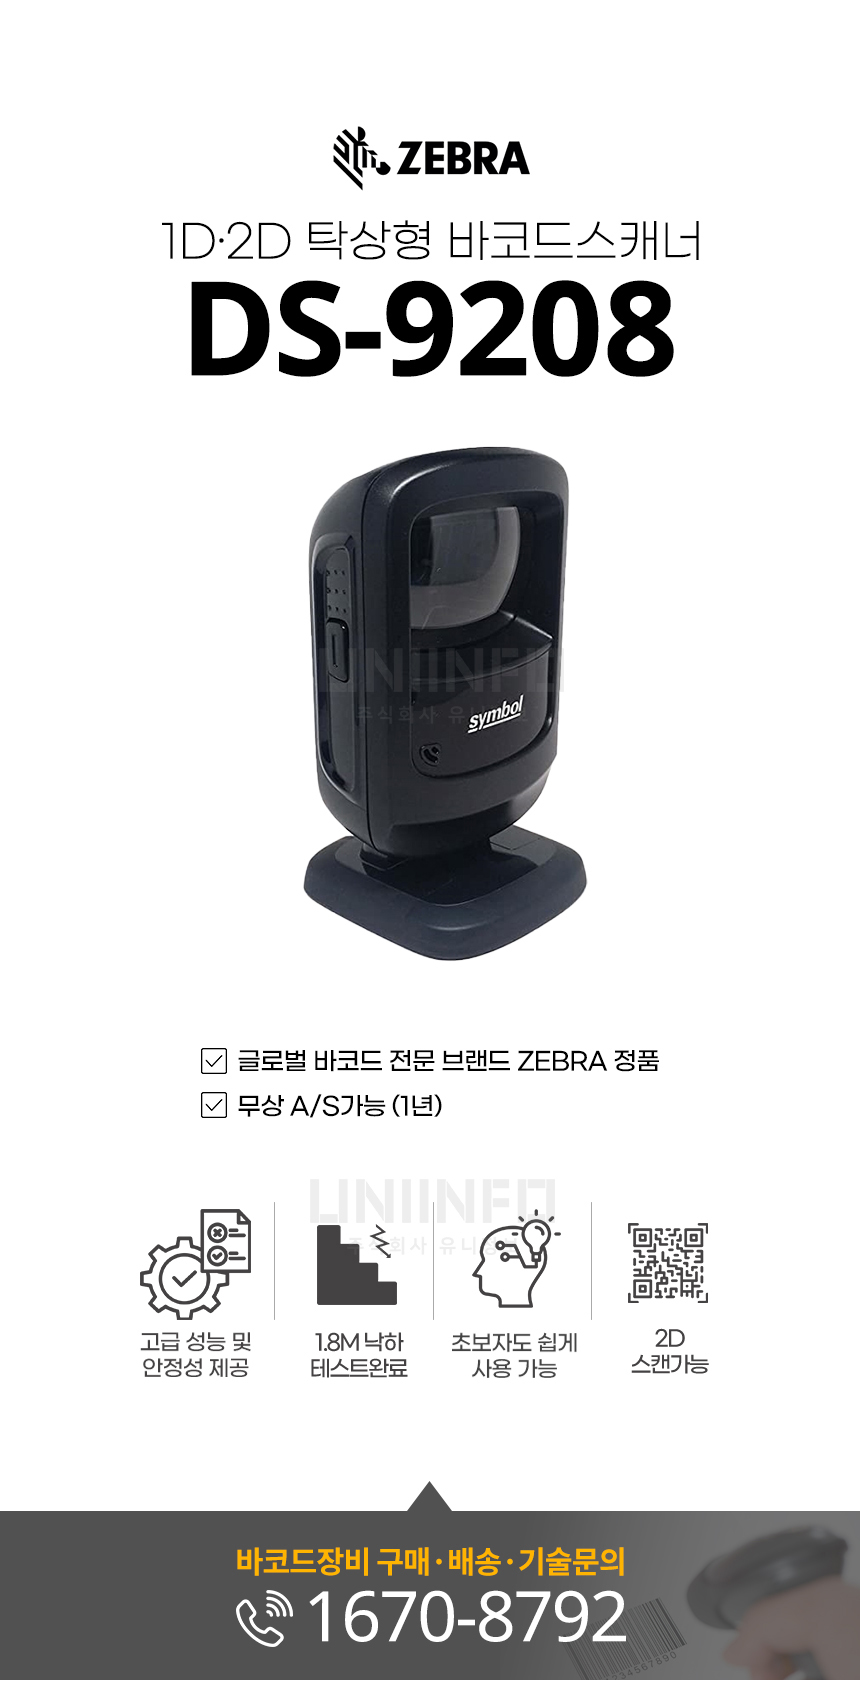 DS-9208 탁상형 바코드 스캐너 1d 2d zebra 정품 무상 A/S 가능 (1년) 고급 성능 및 안전성 제공 1.8m 낙하 테스트 완료